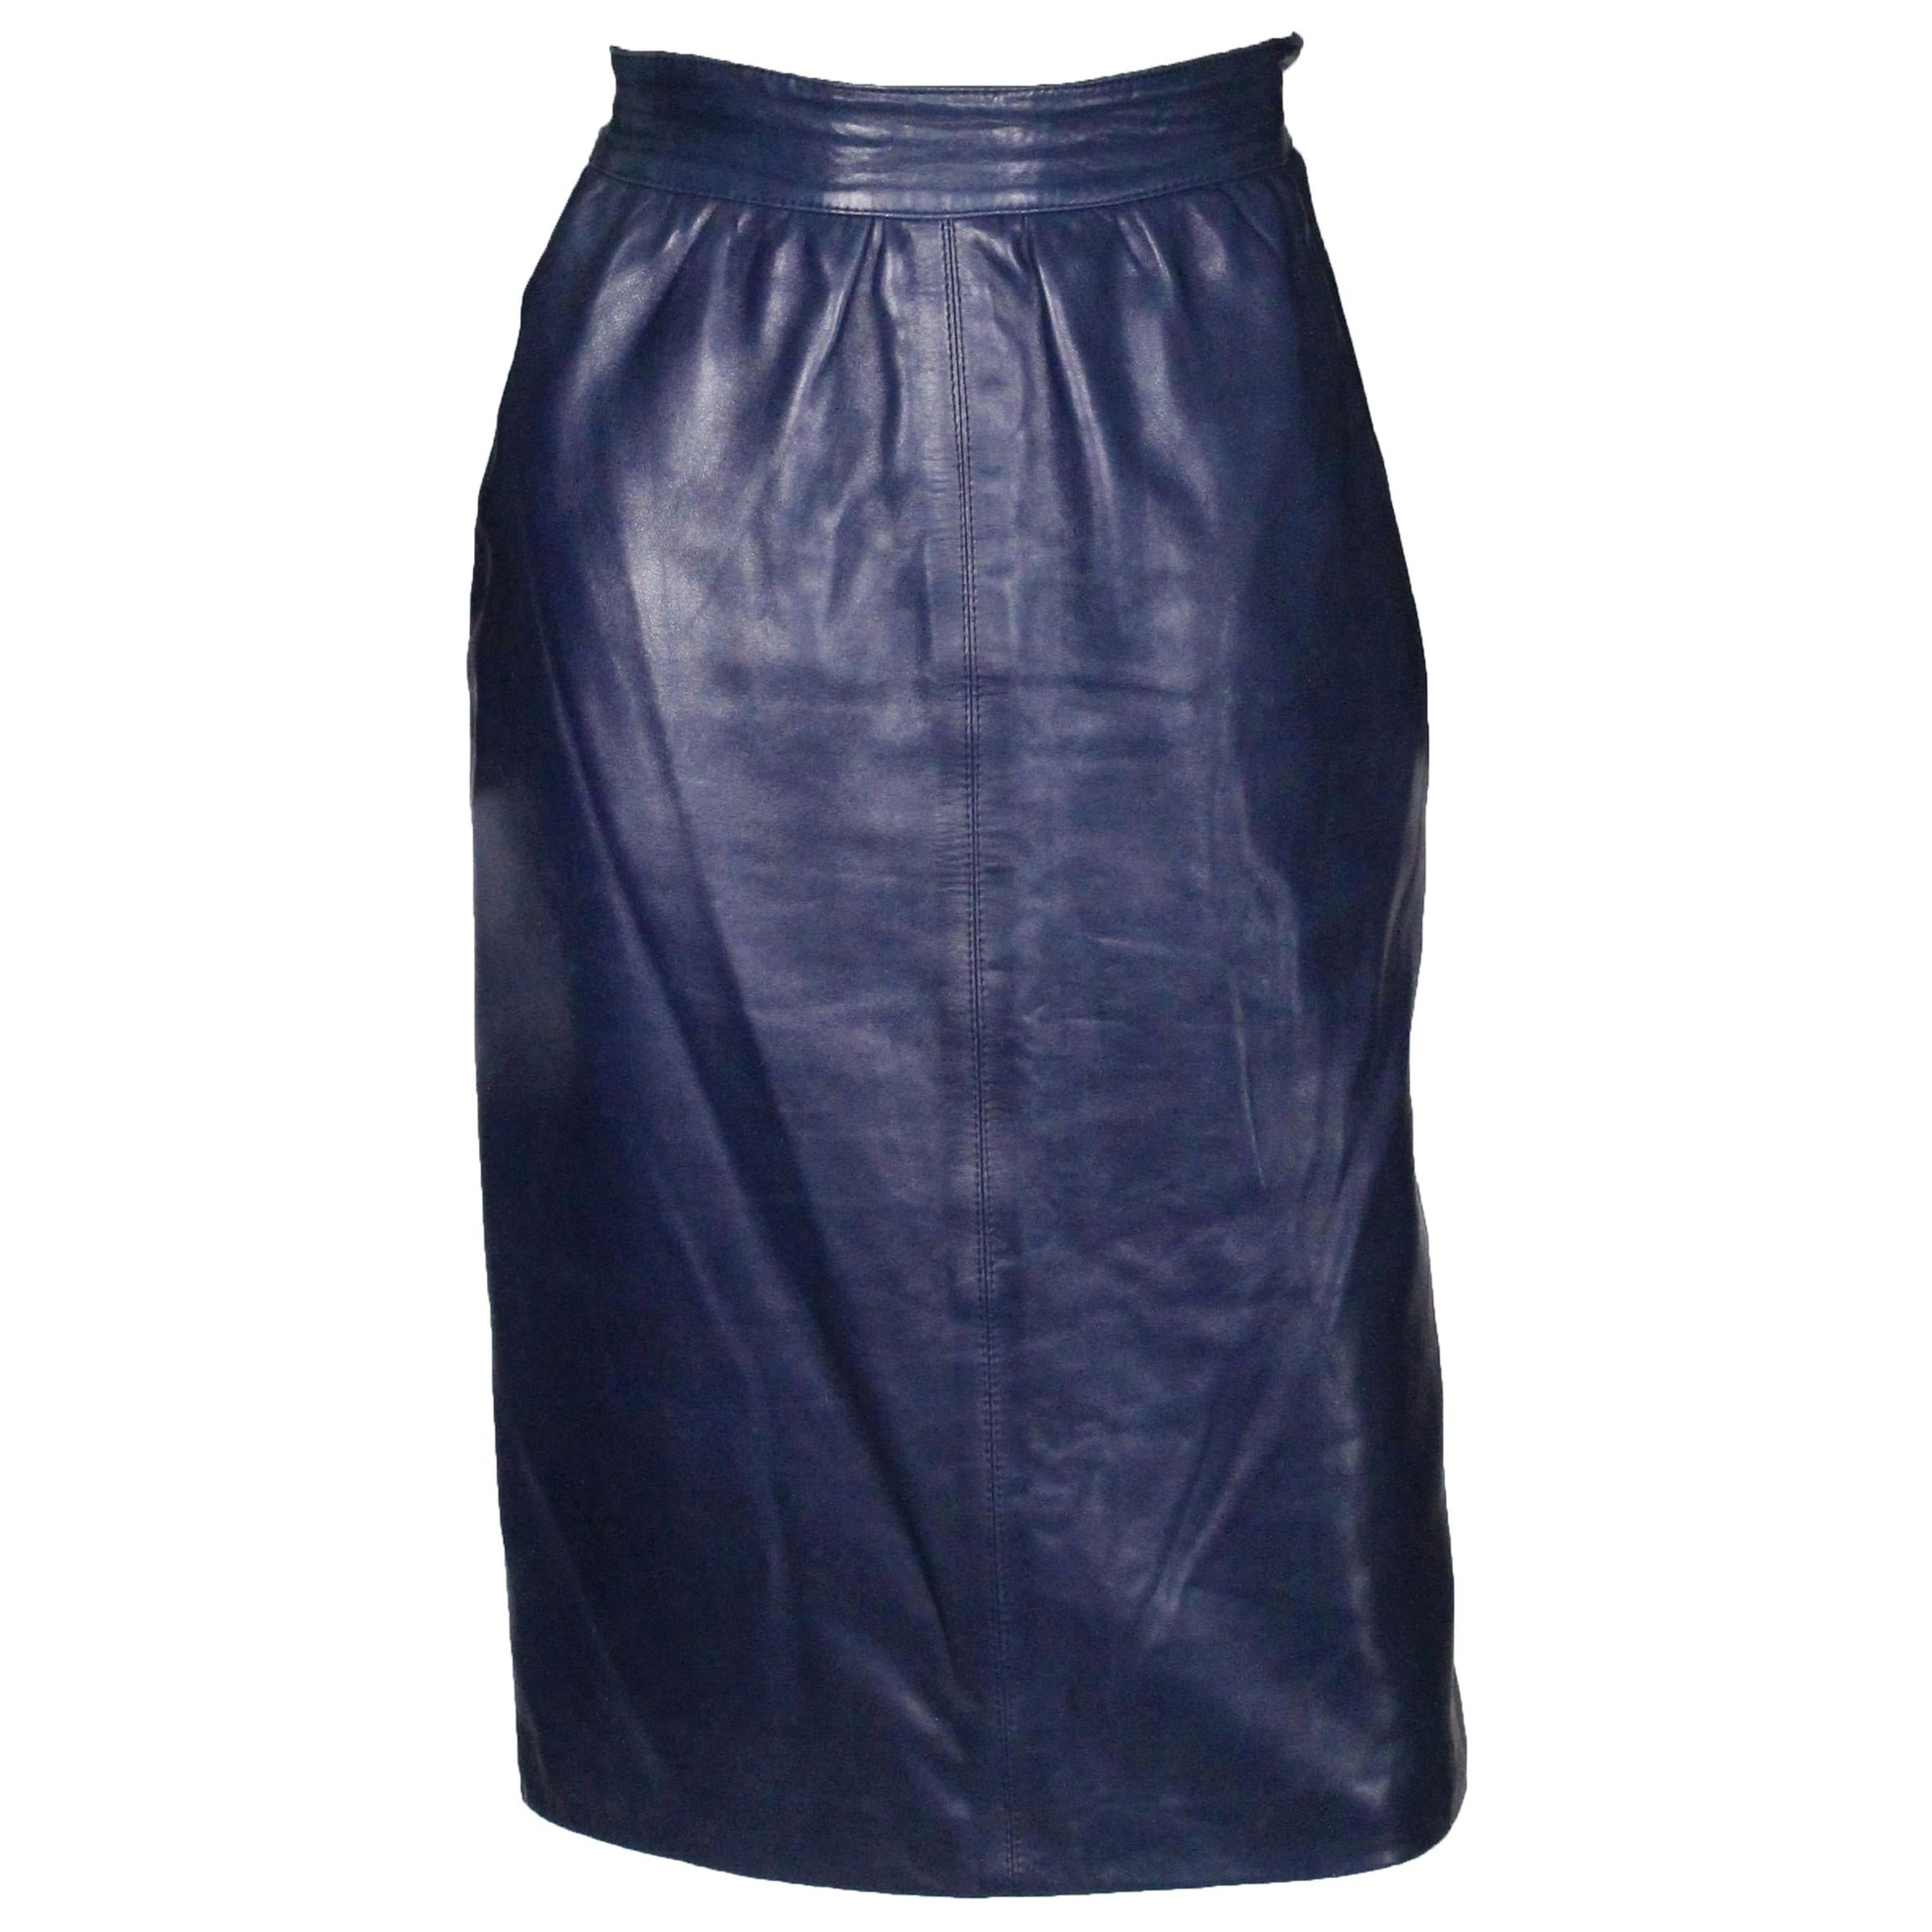 A vintage 1980s Blue Leather Skirt by Yves Saint Laurent Rive Gauche